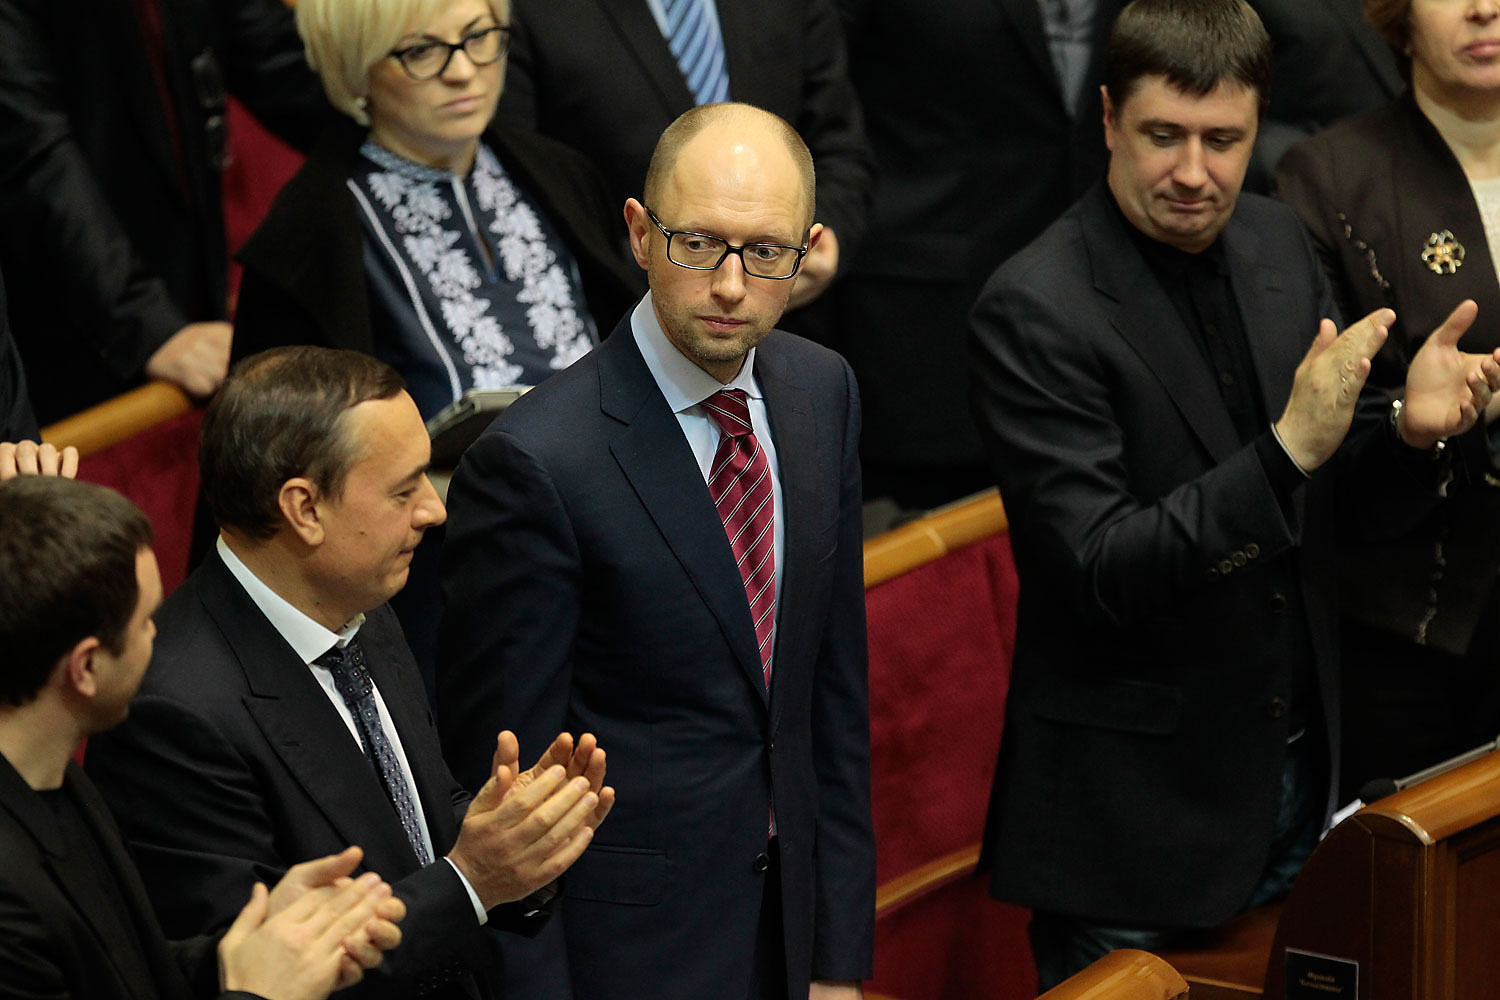 Ukrainian lawmakers applaud new Prime Minister Arseniy Yatsenyuk, center, during a session at the Ukrainian parliament in Kiev, Feb. 27, 2014. (Sergei Chuzavkov&mdash;AP)